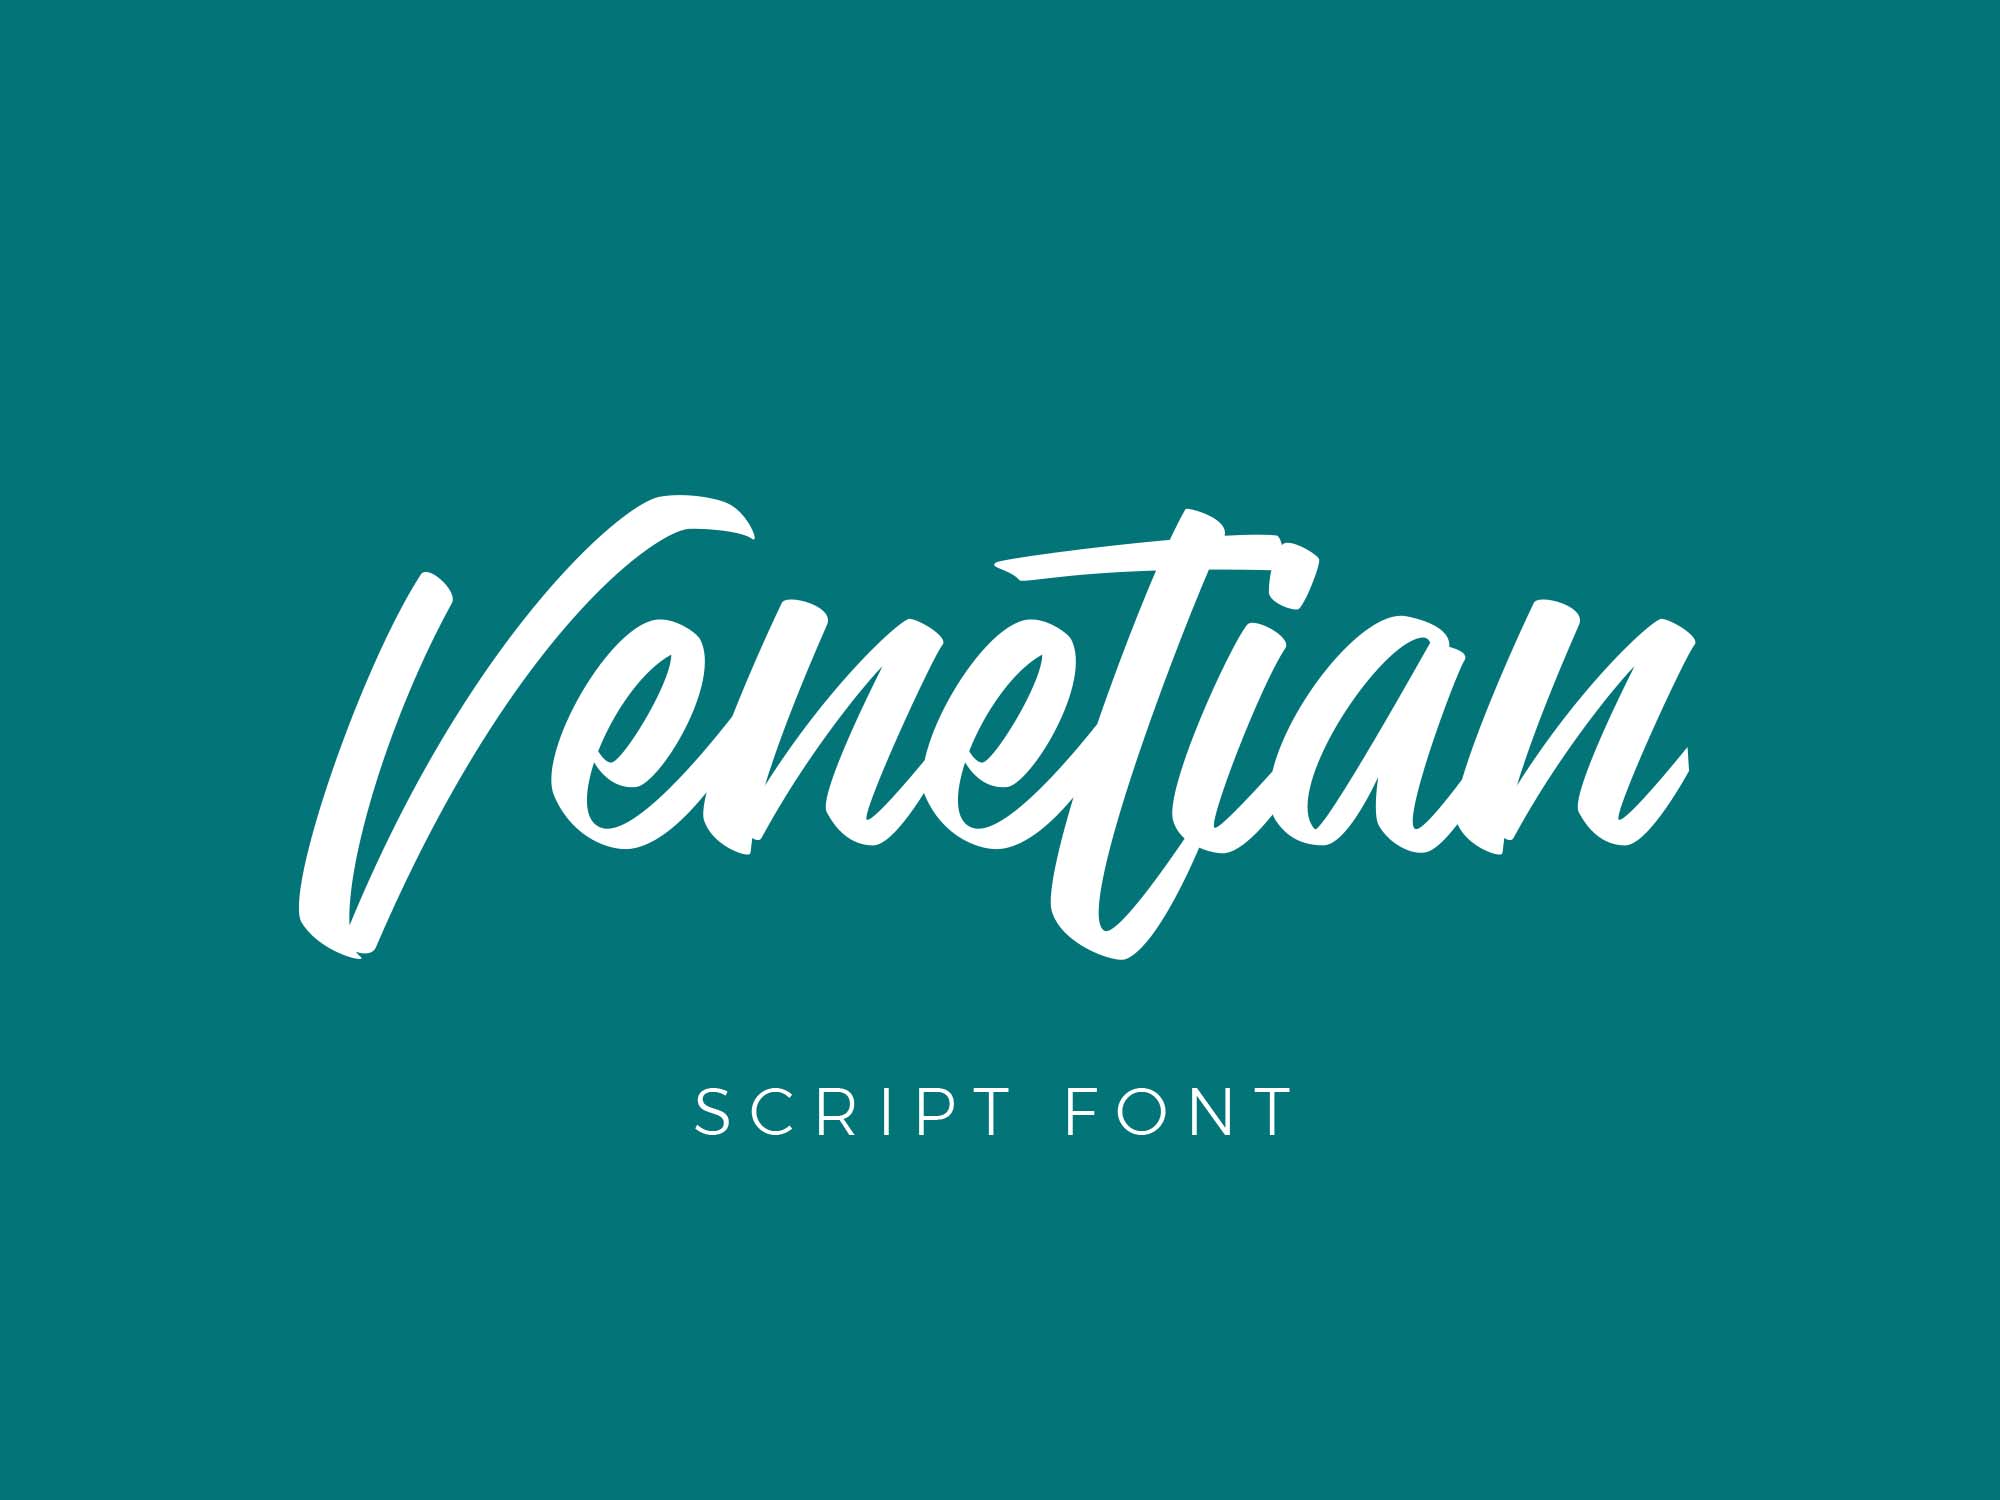 Venetian Script Font